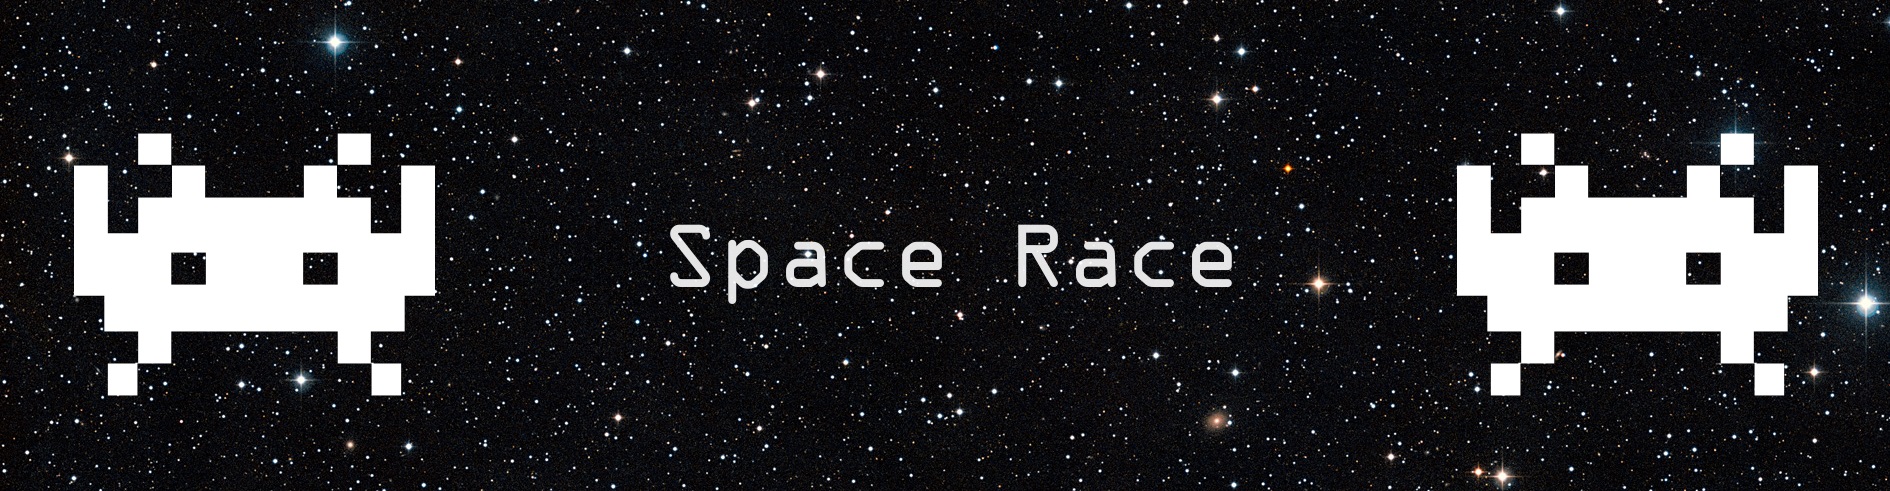 Space Race